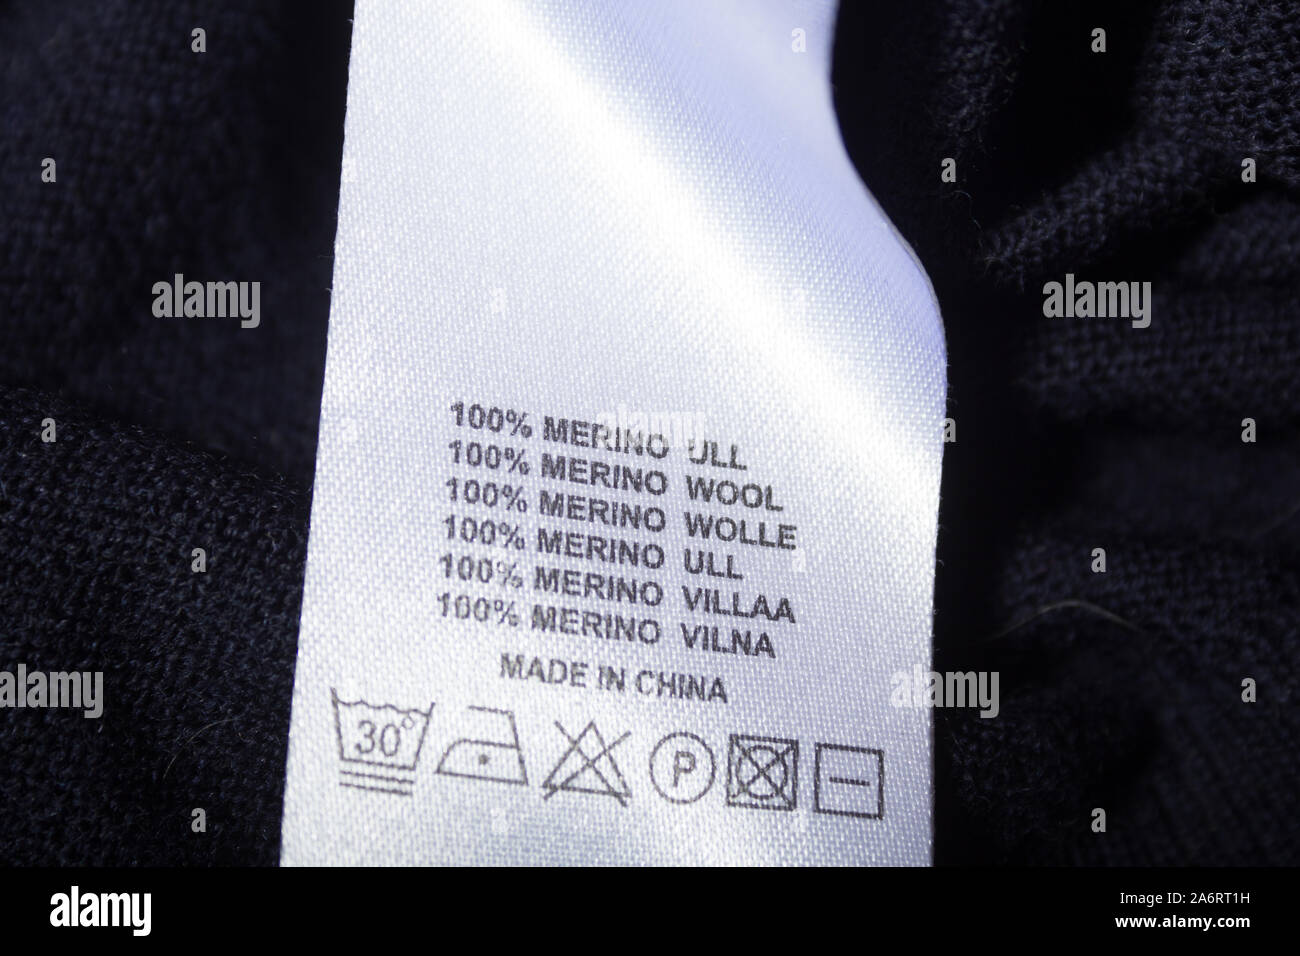 Label on the sweater. 100 merino wool Stock Photo